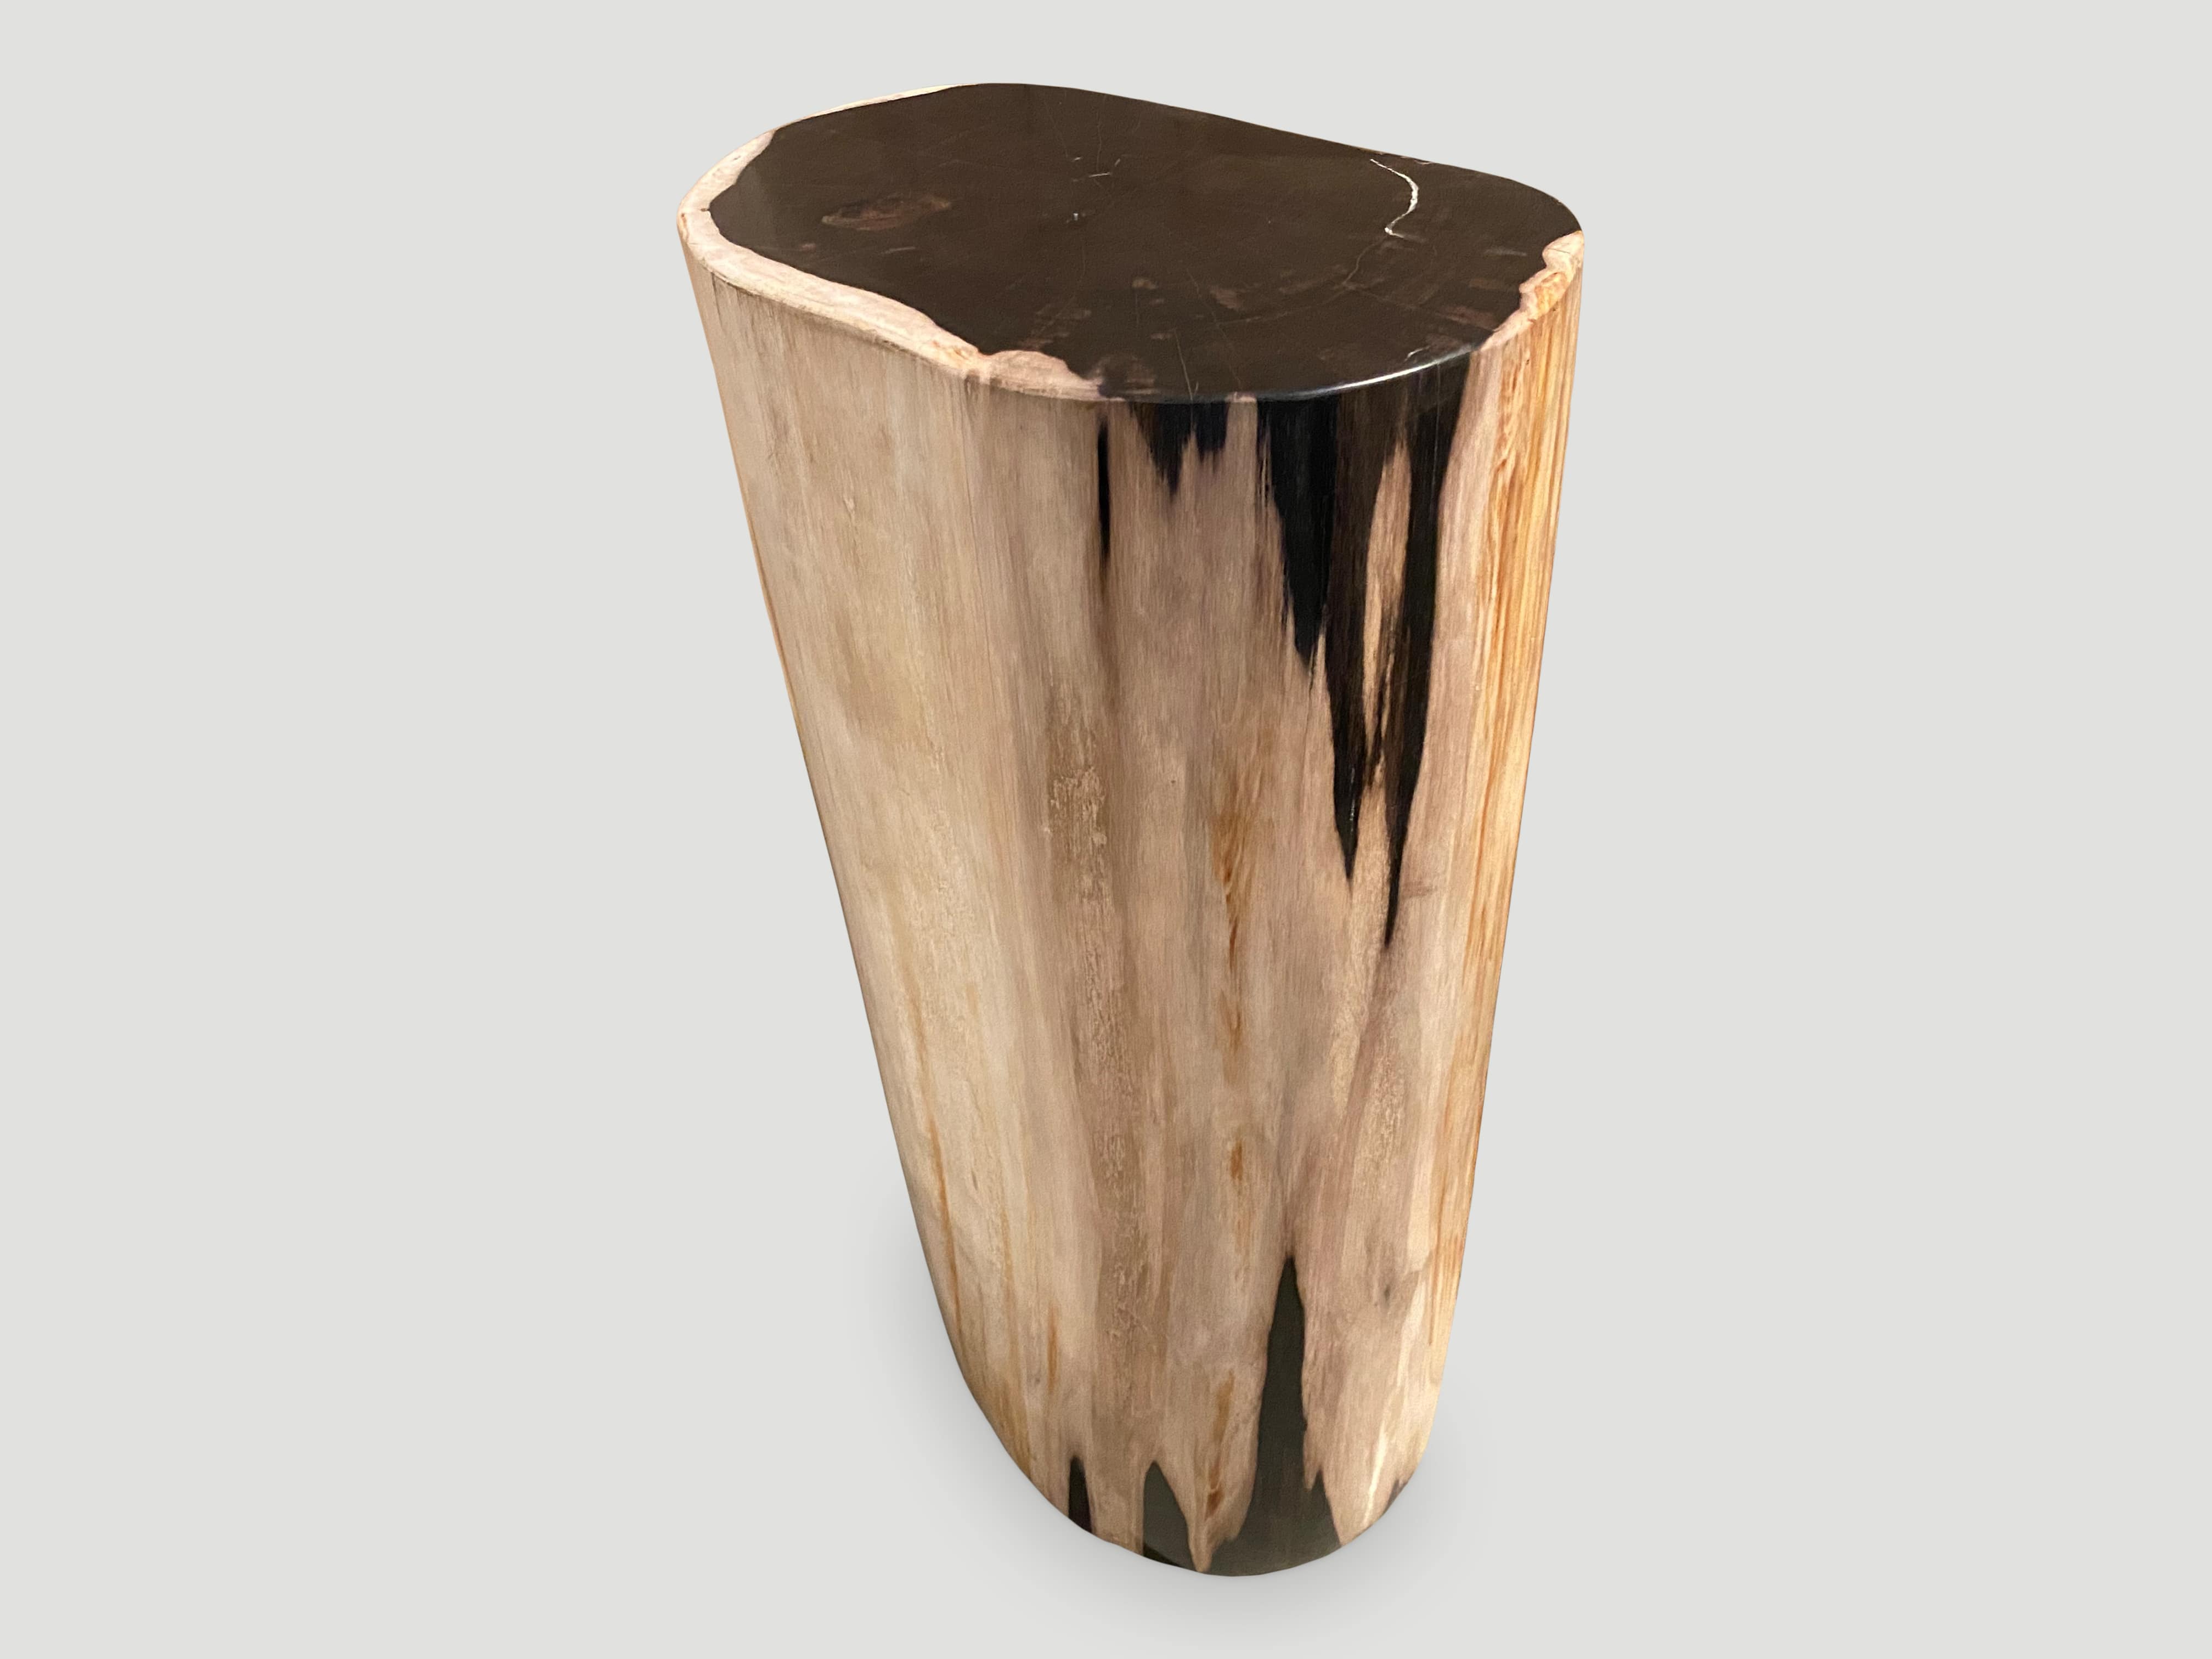 petrified wood side table or pedestal